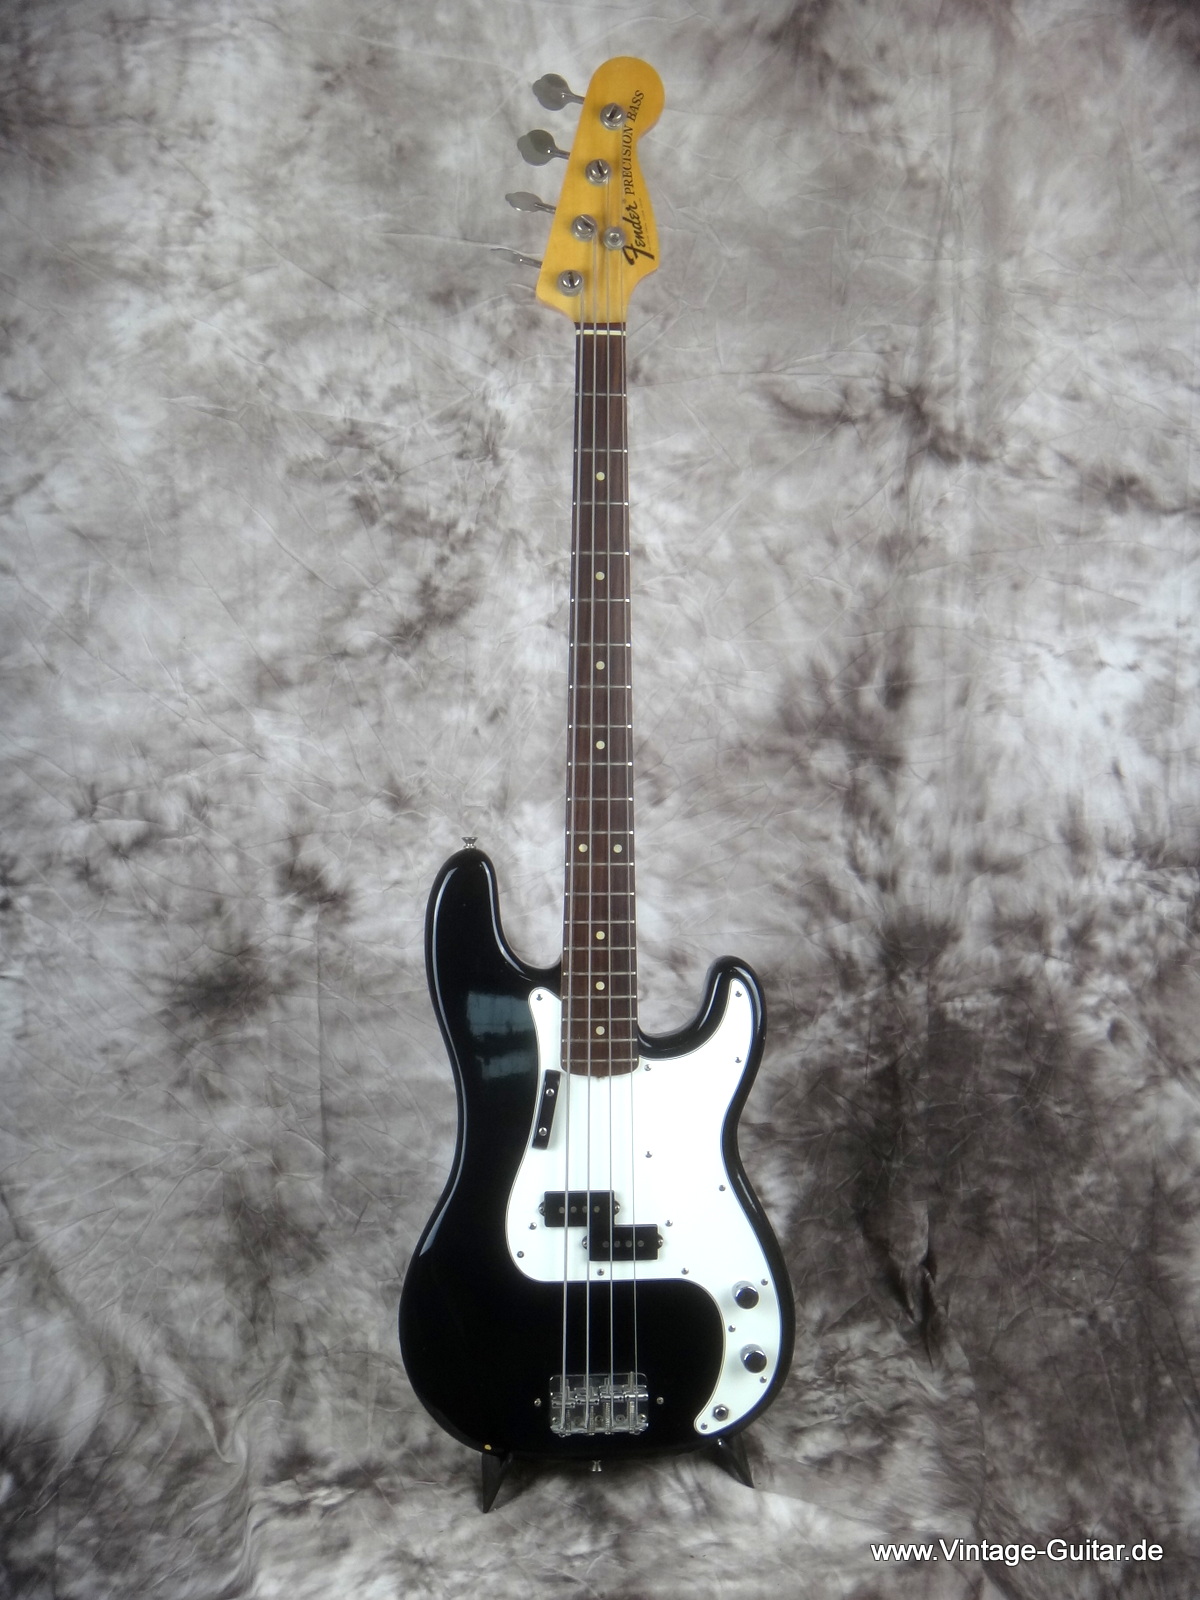 Fender_Precison-Bass_black-1974-001.JPG